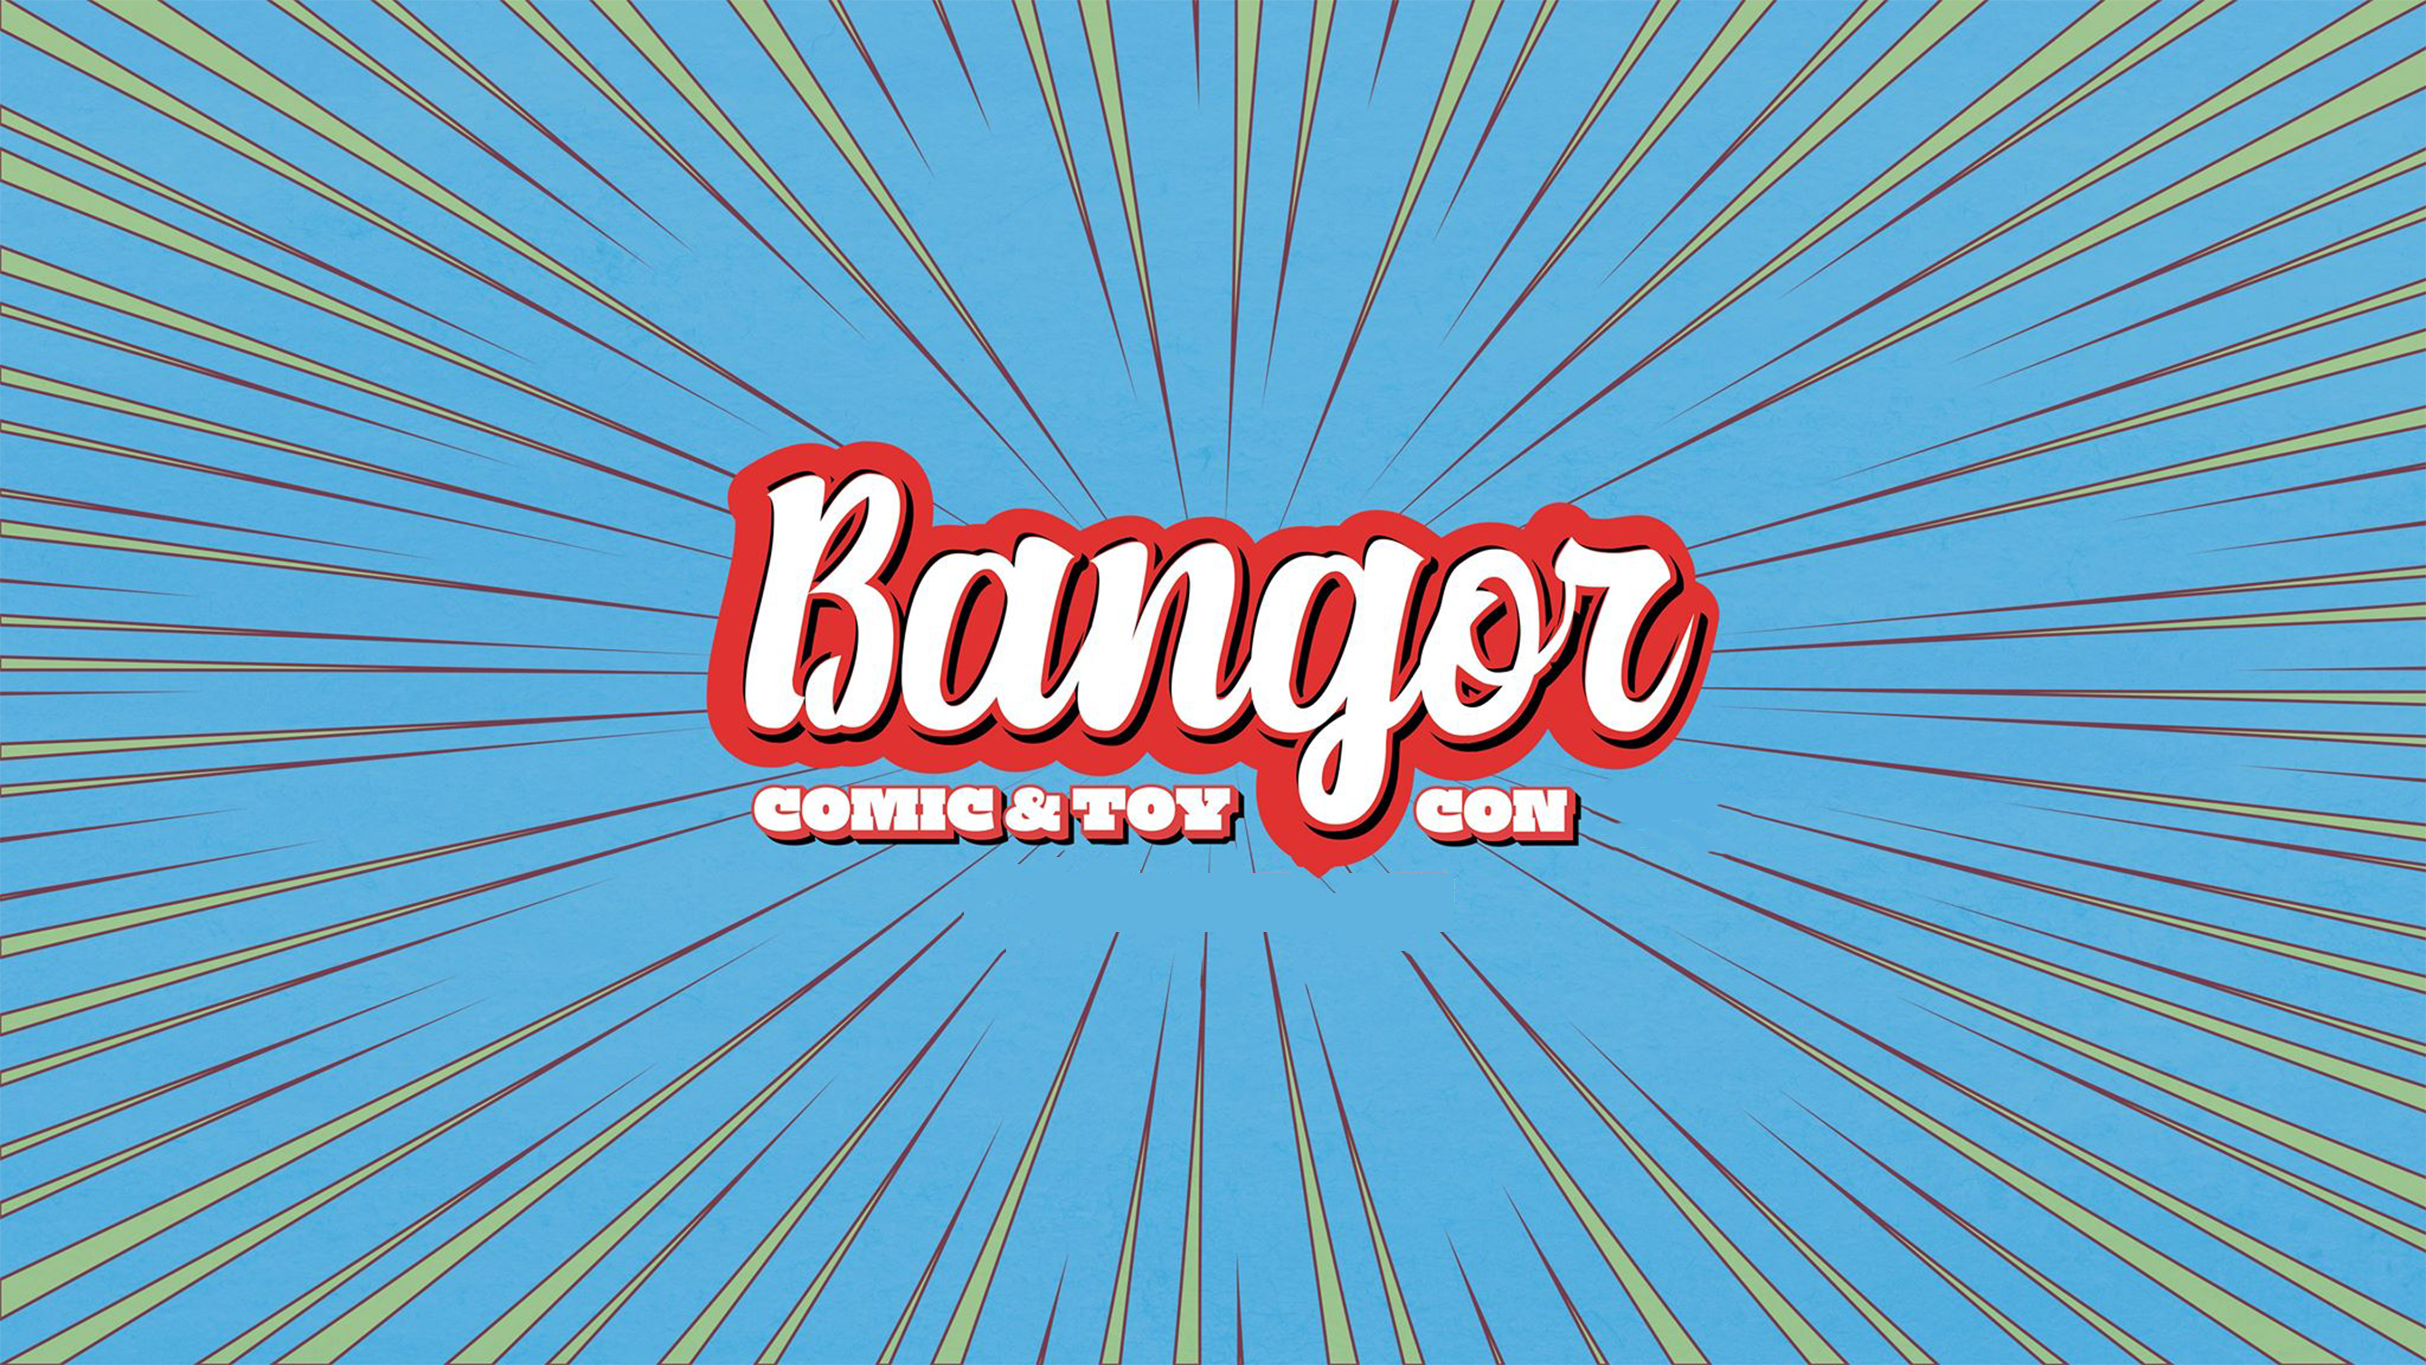 Bangor Comic and Toy Con - Saturday (10:00 AM - 7:00 PM)